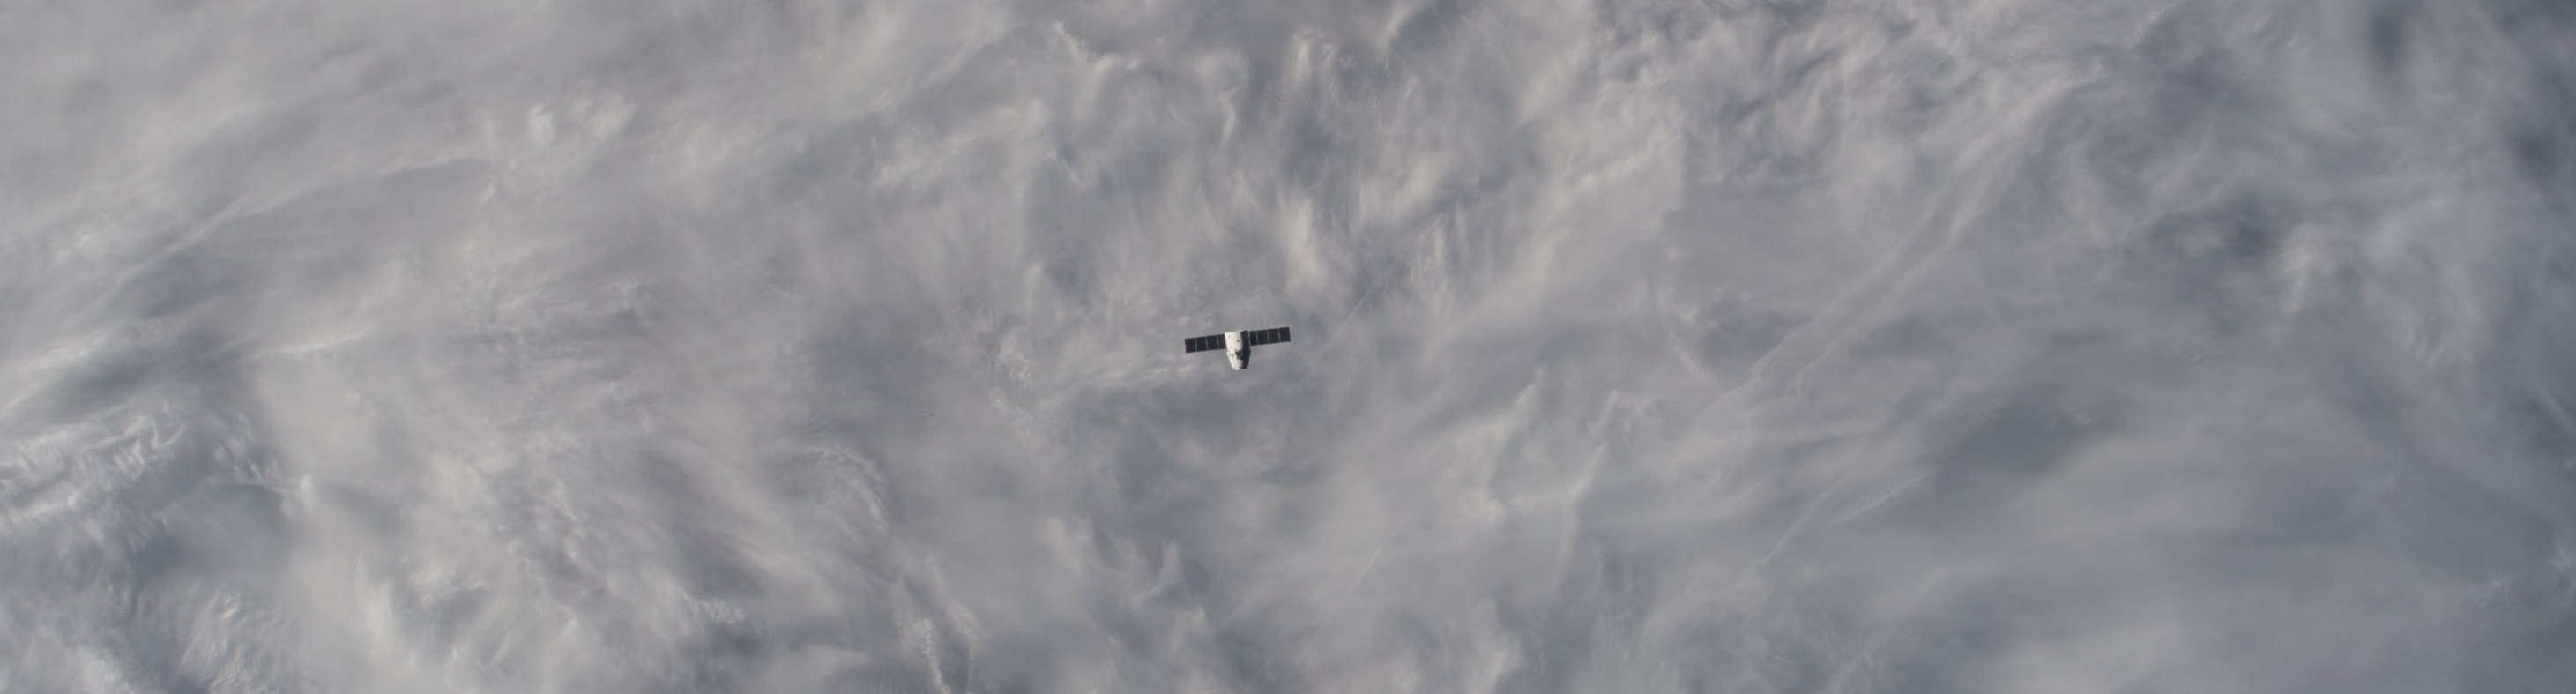 SpaceX запустили на орбиту паровую машину: видео всего процесса